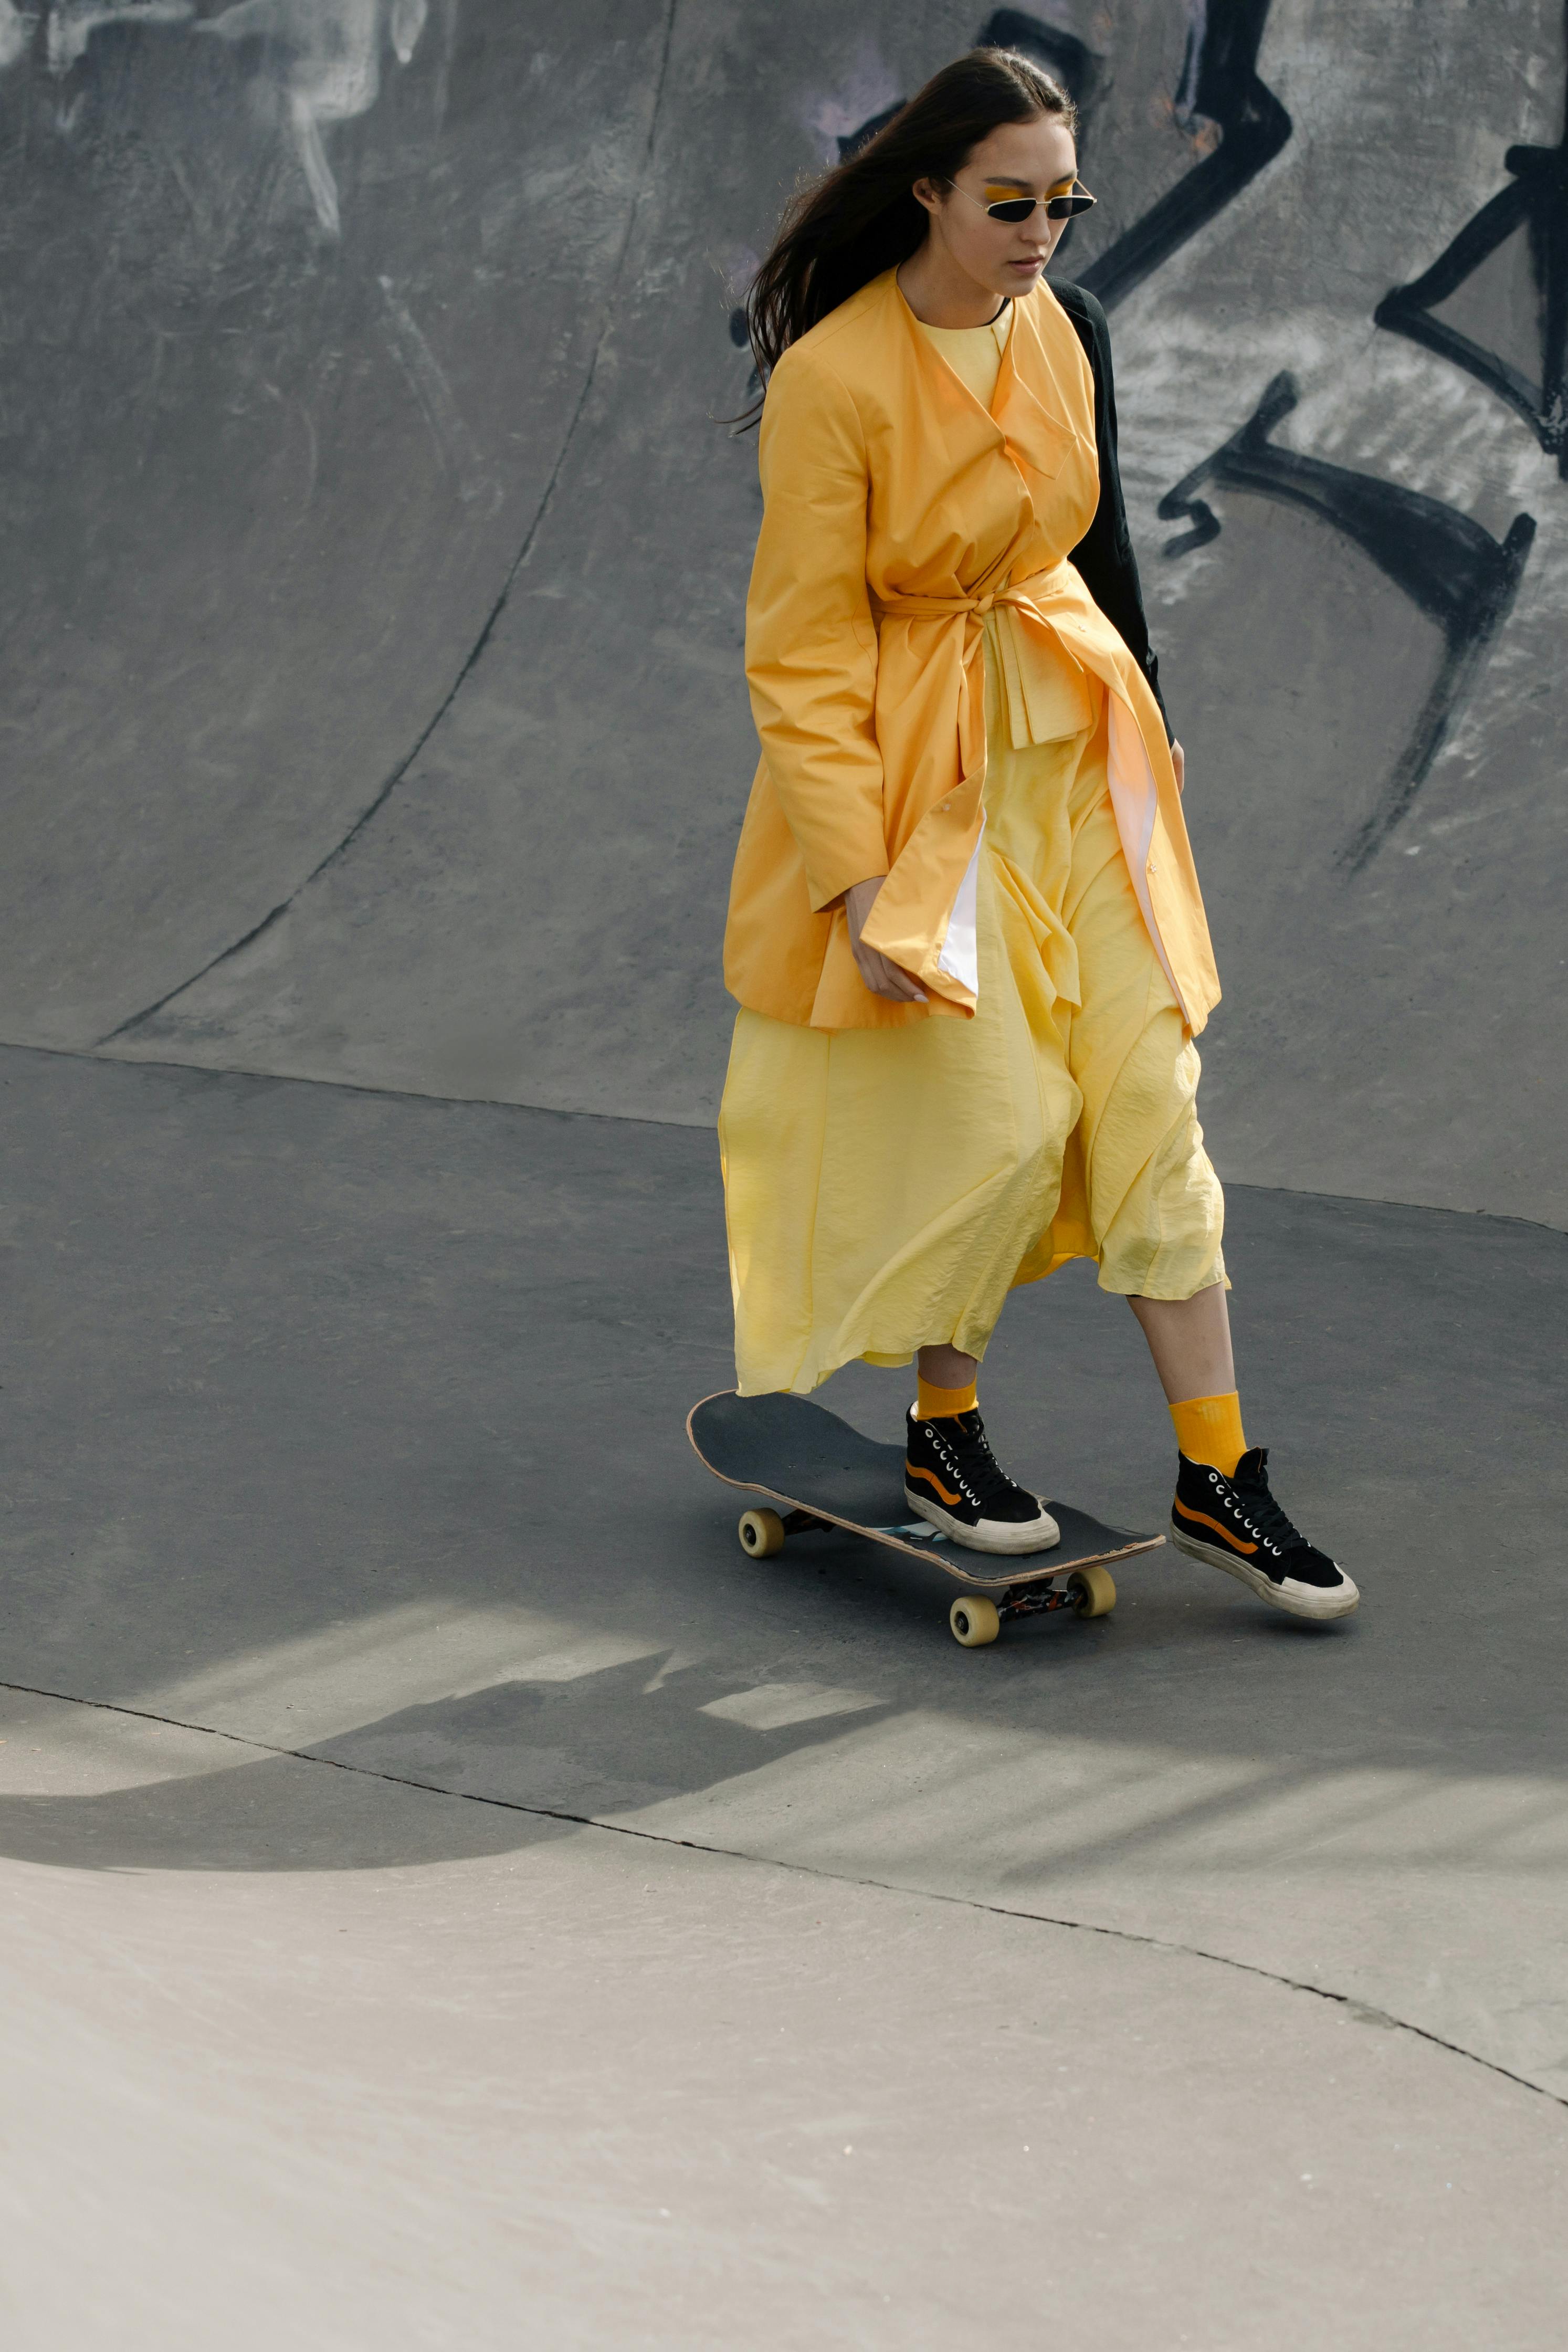 Men in Suits Skateboarding · Free Stock Photo